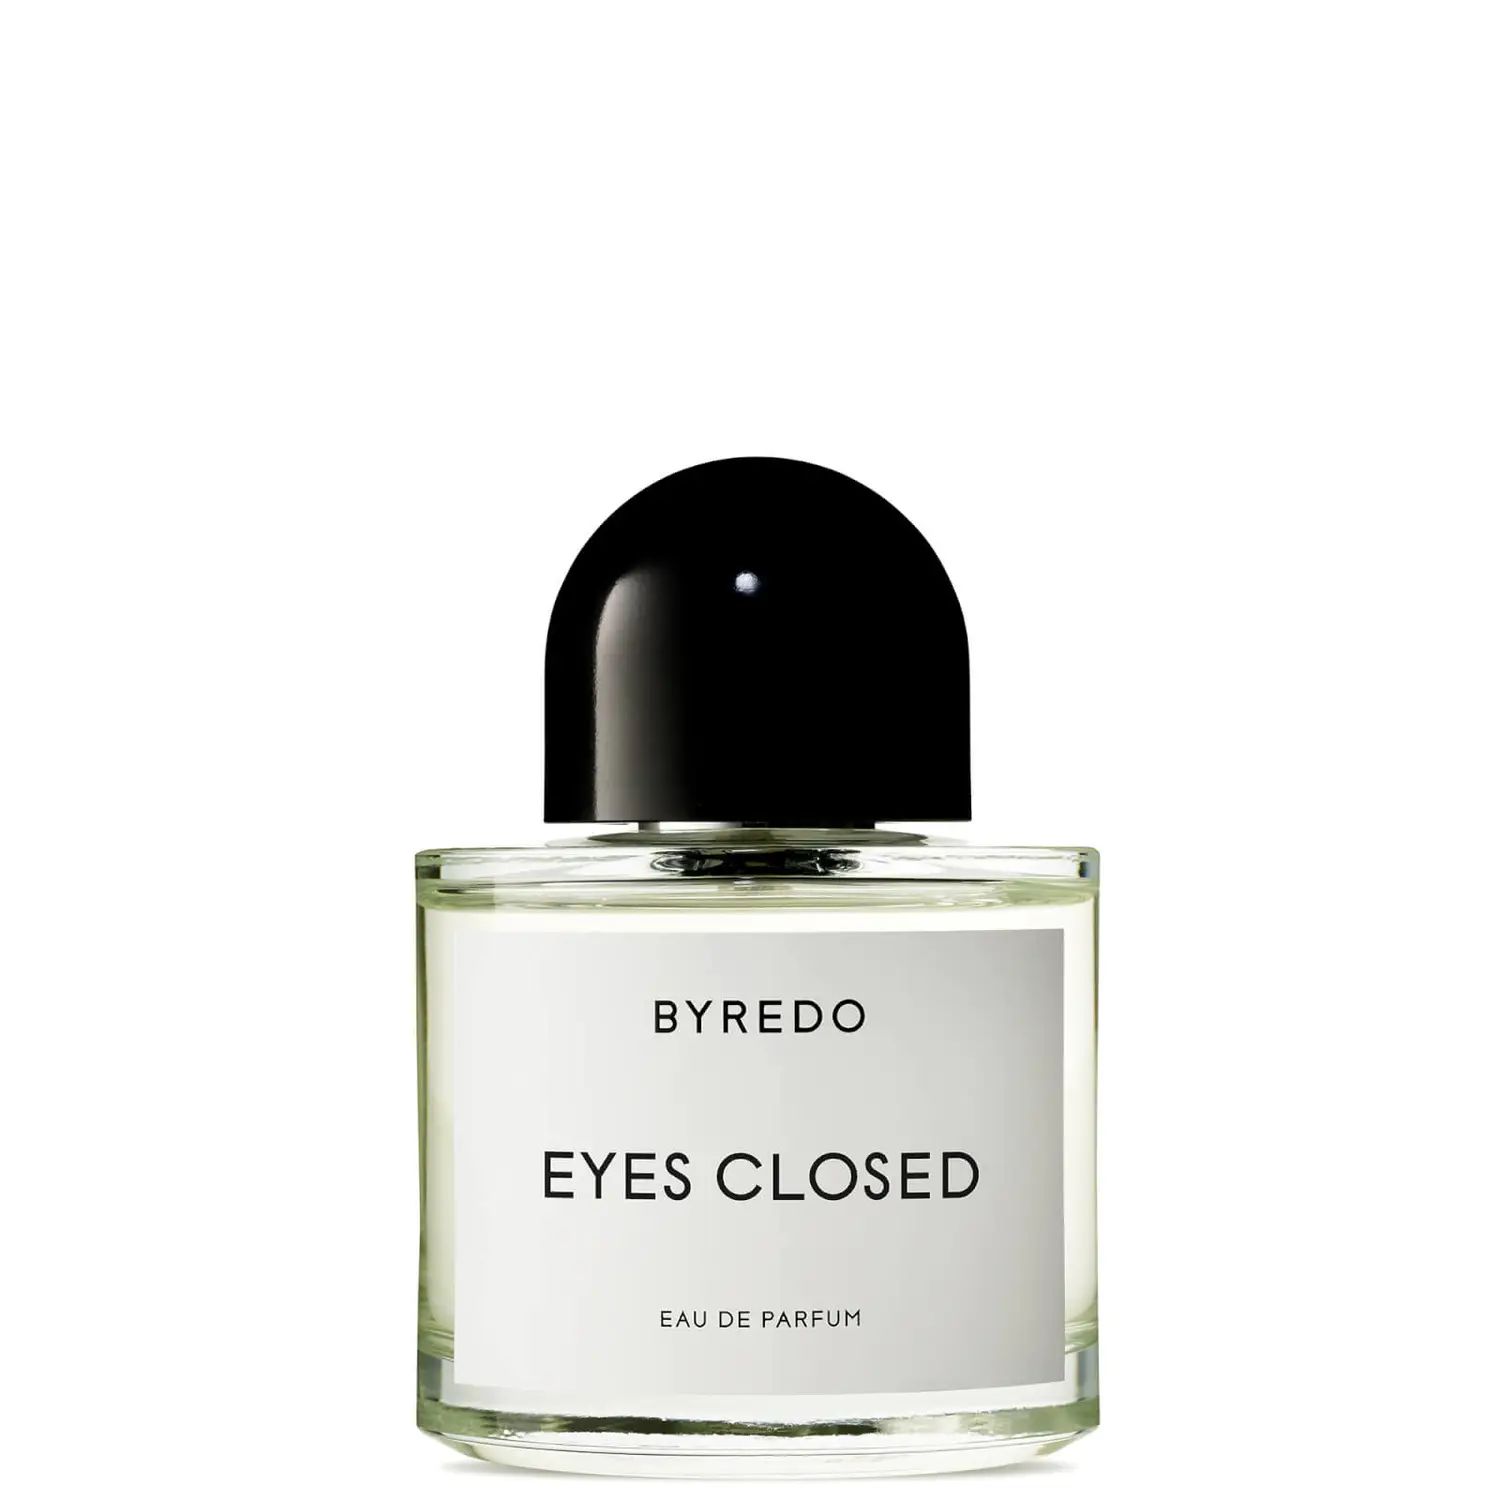 BYREDO Eyes Closed Eau de Parfum 50ml | Cult Beauty